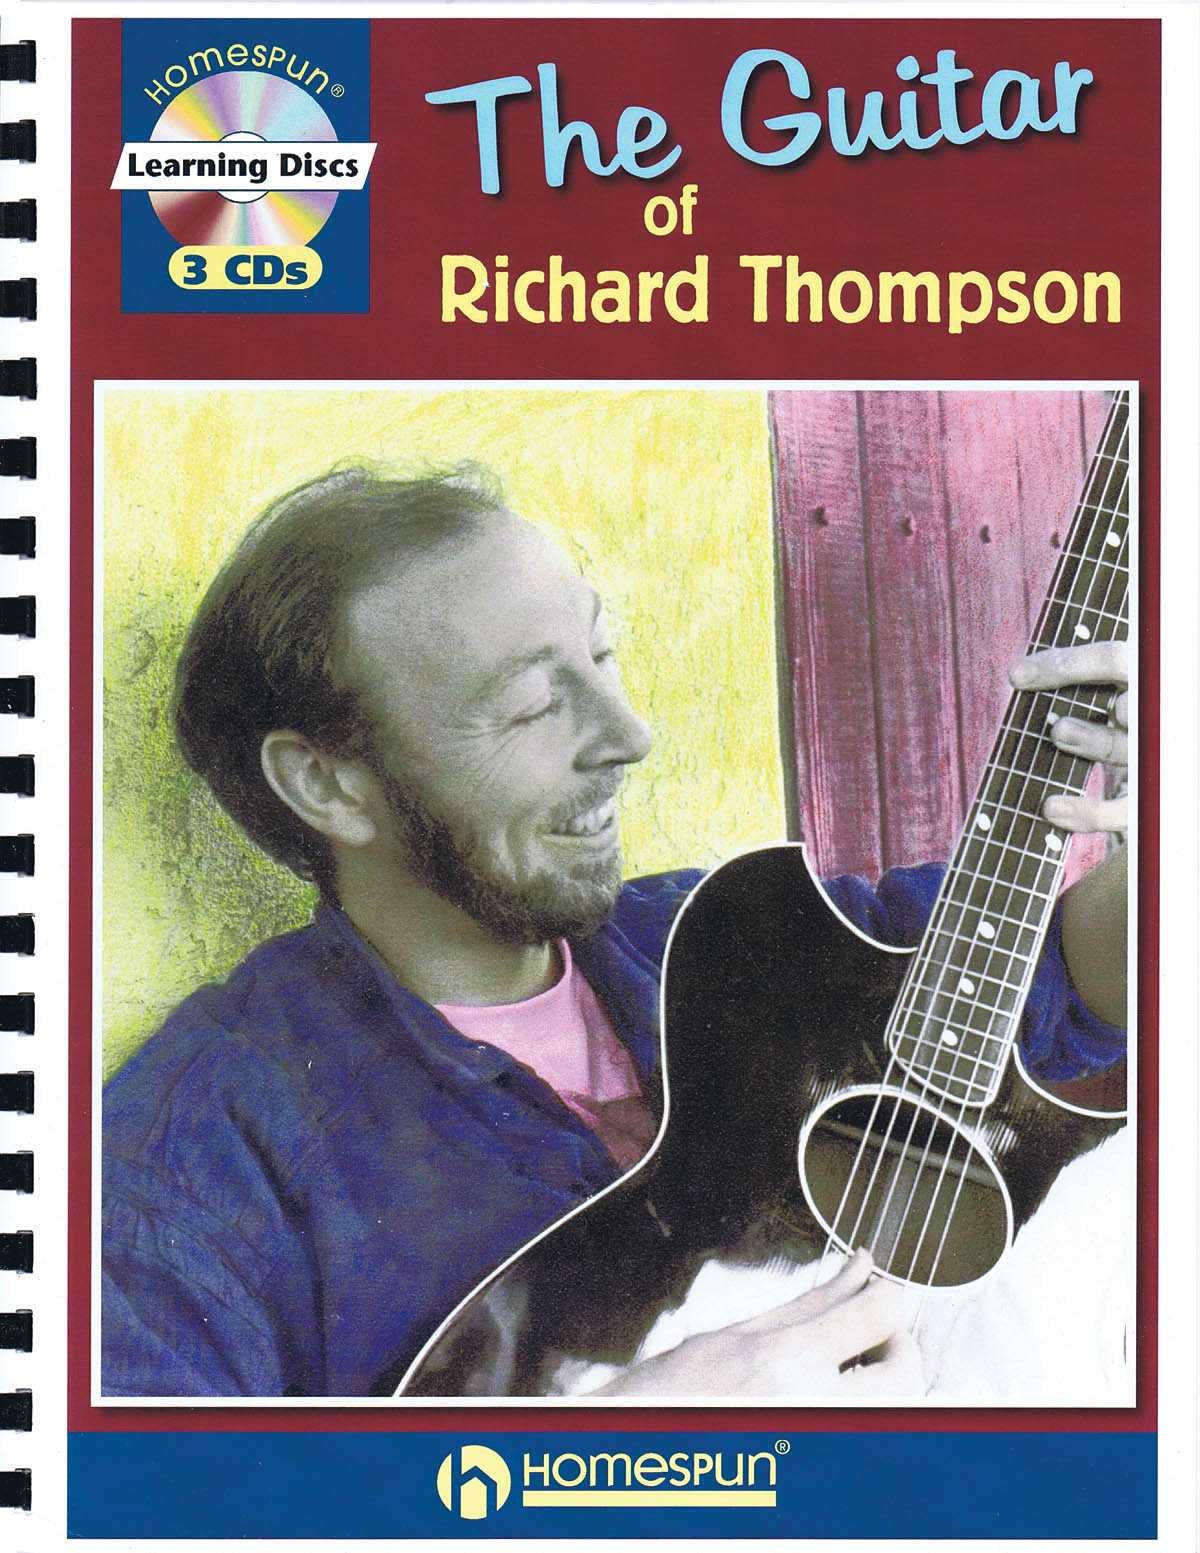 Image 1 of The Guitar of Richard Thompson - SKU# 300-627 : Product Type Media : Elderly Instruments